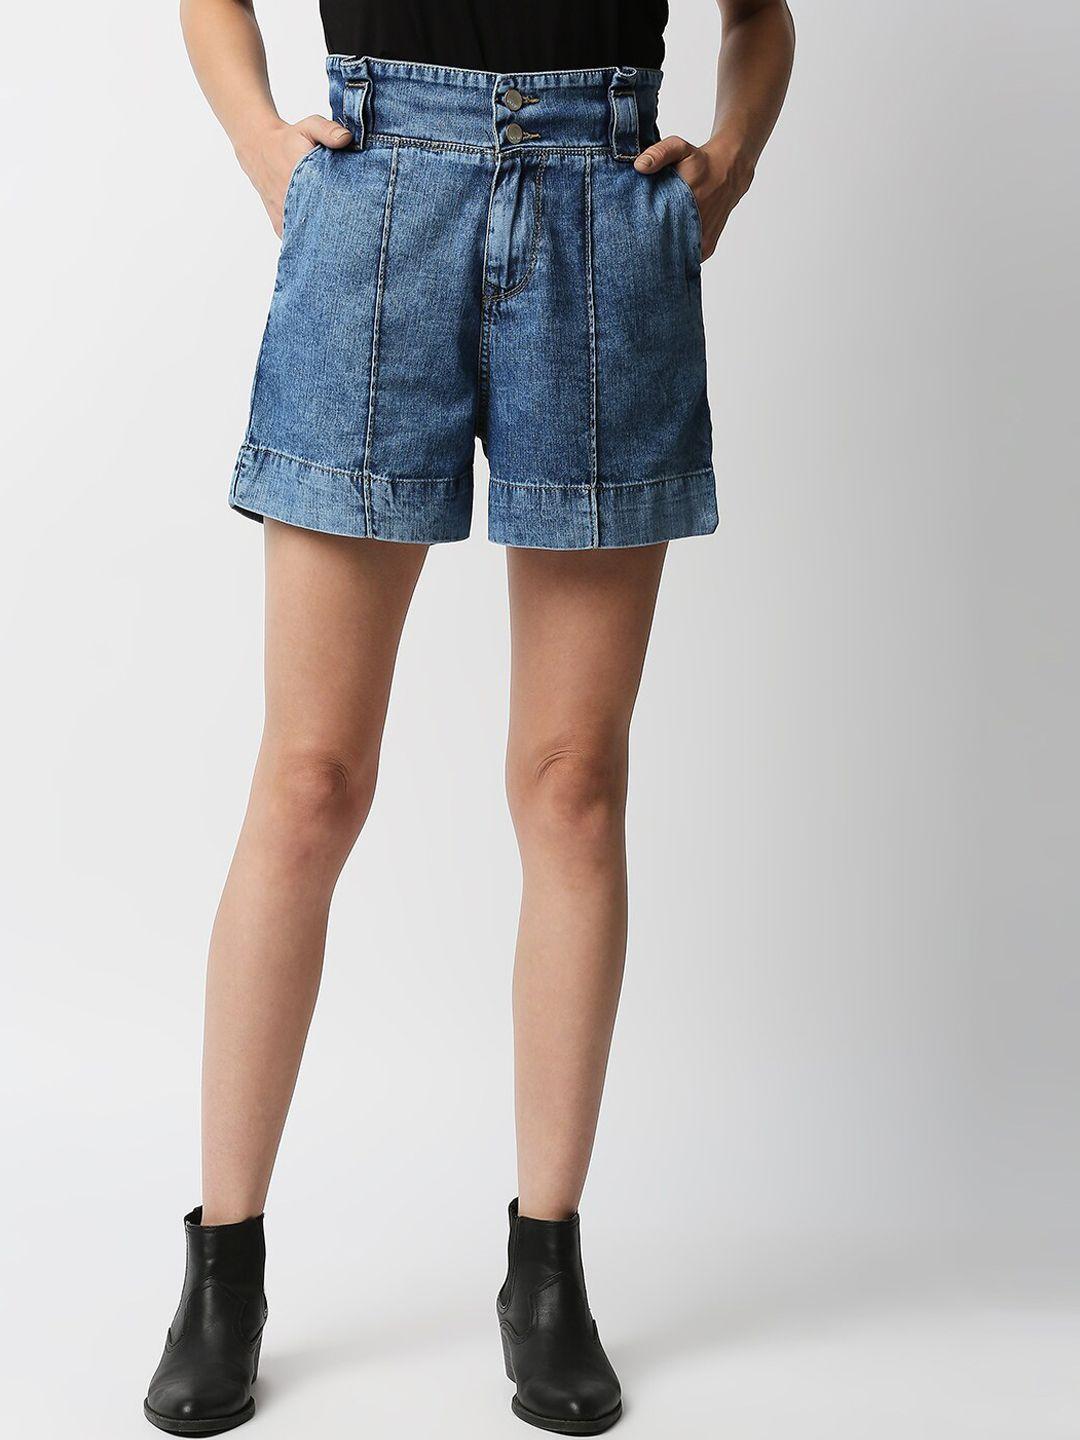 kraus-jeans-women-blue-slim-fit-high-rise-fashion-denim-shorts